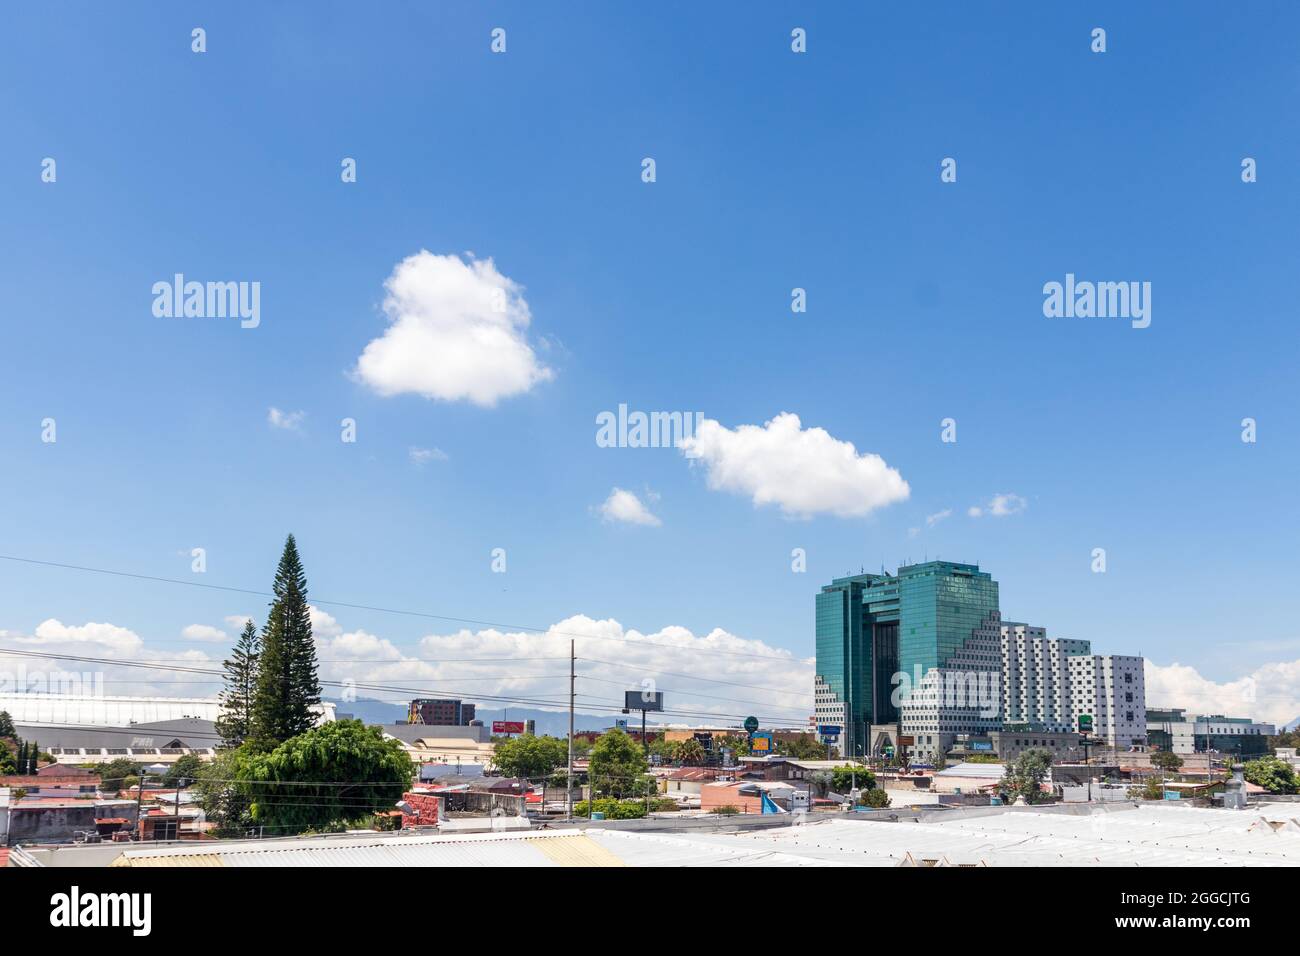 paisaje urbano de la ciudad de guatemala Foto de stock